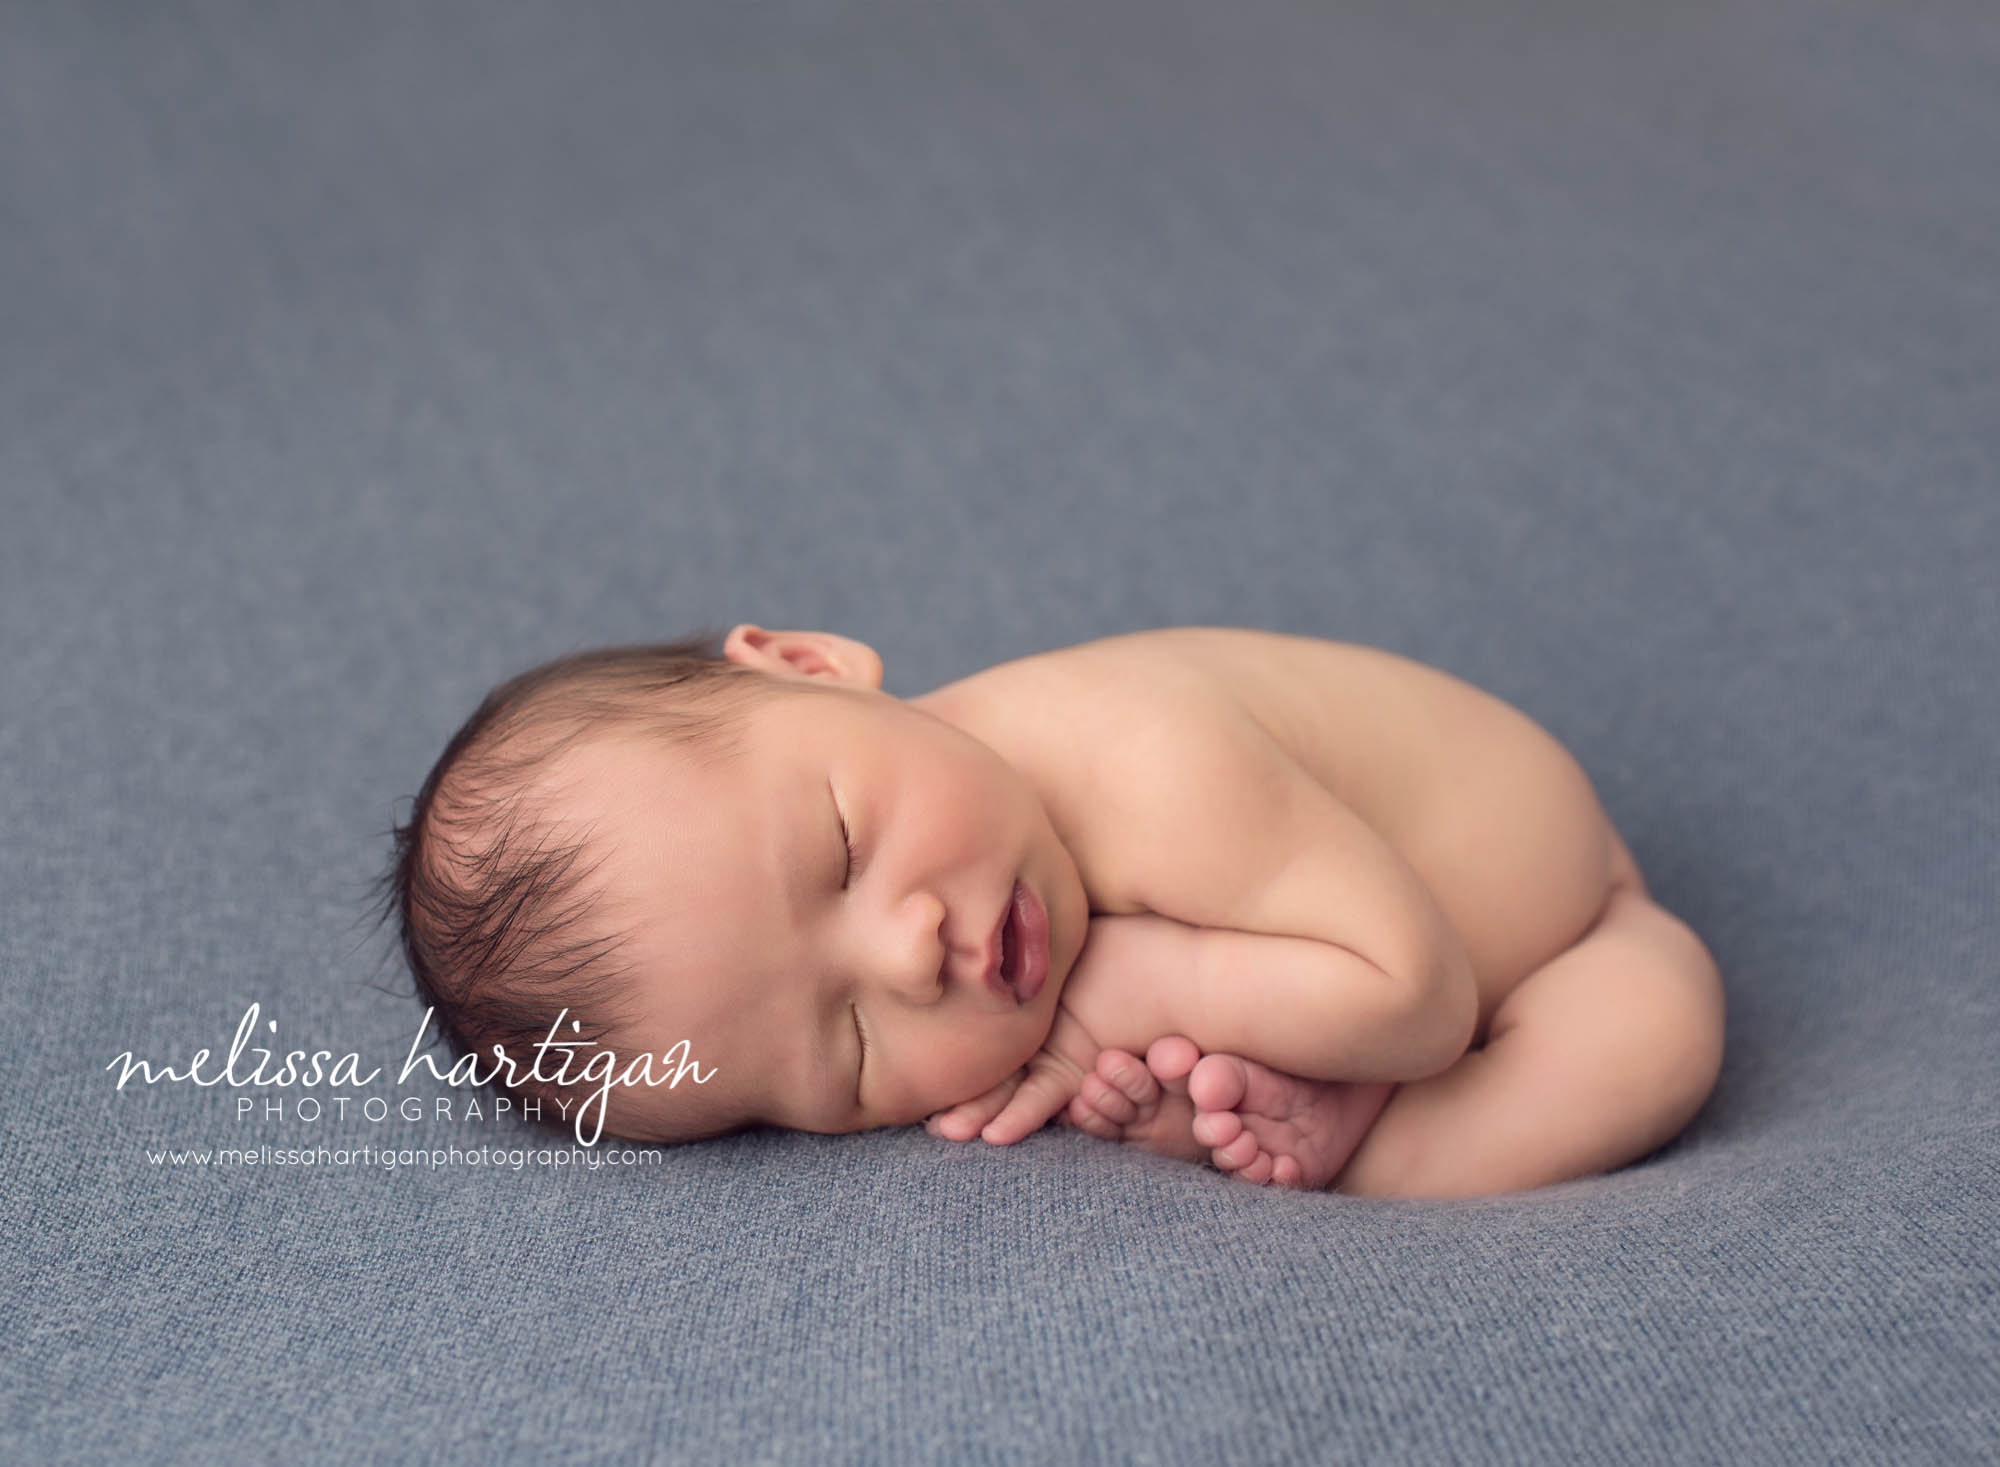 Melissa Hartigan Photography Maternity and Newborn Connecticut Photographer Lucas Newborn Session Baby boy sleeping on blue blanket